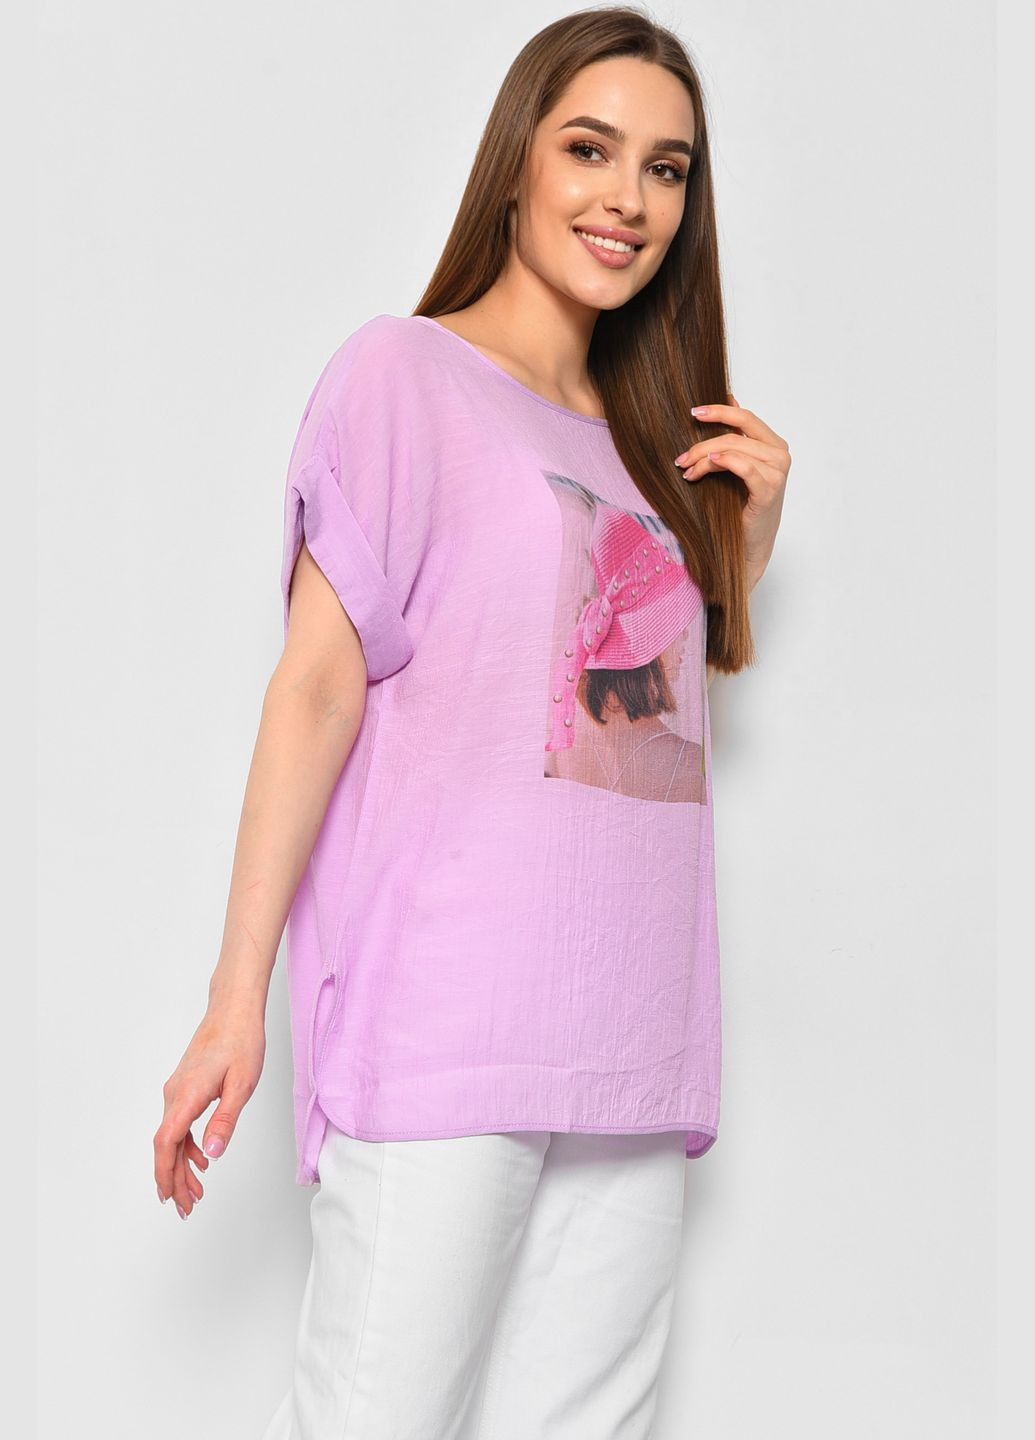 Фіолетова літня футболка жіноча напівбатальна фіолетового кольору Let's Shop